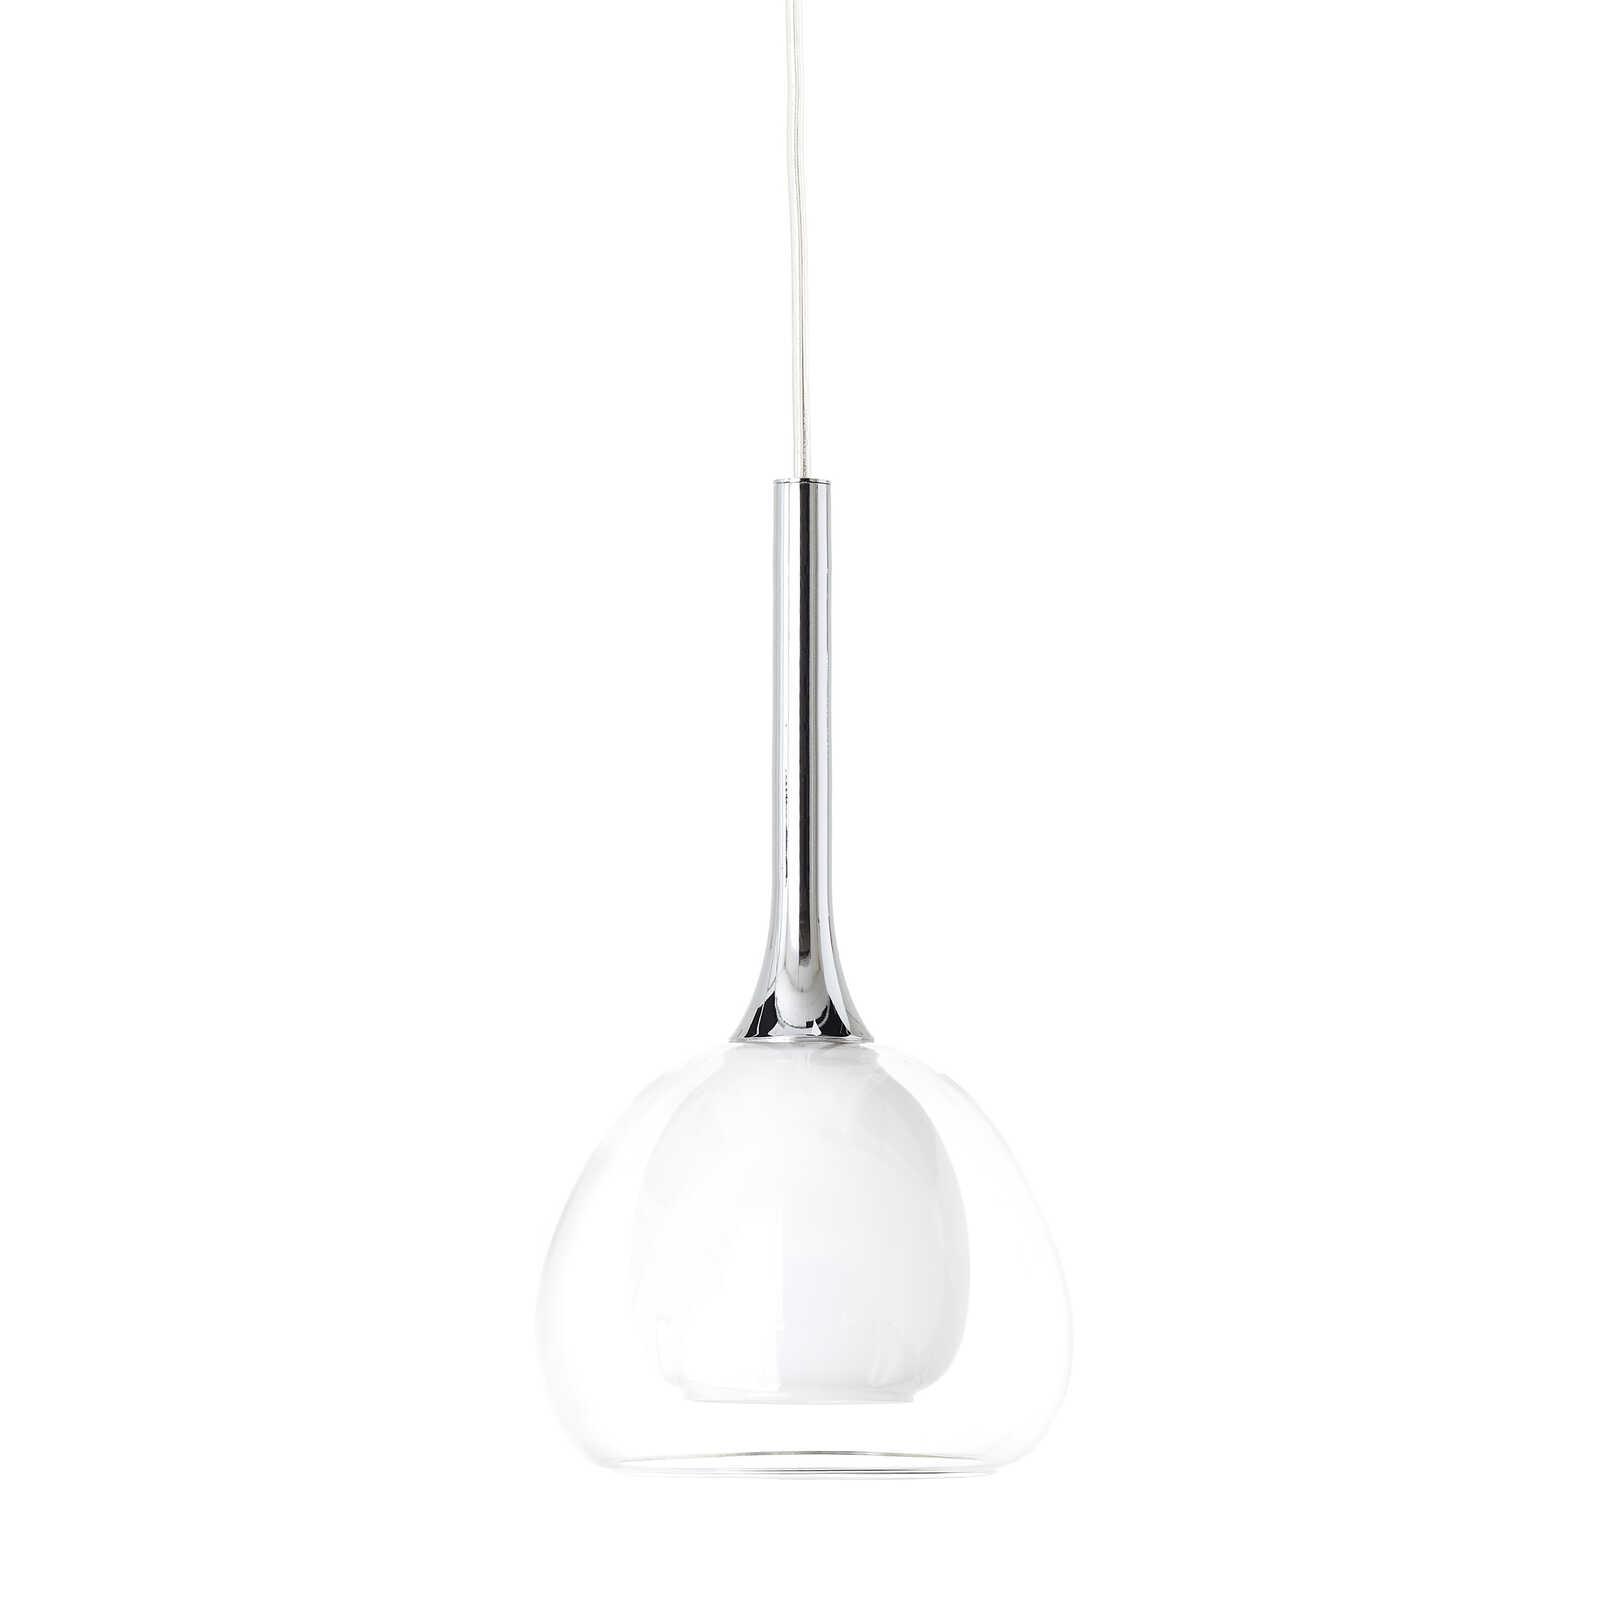             Glass pendant light - Iris 1 - Metallic
        